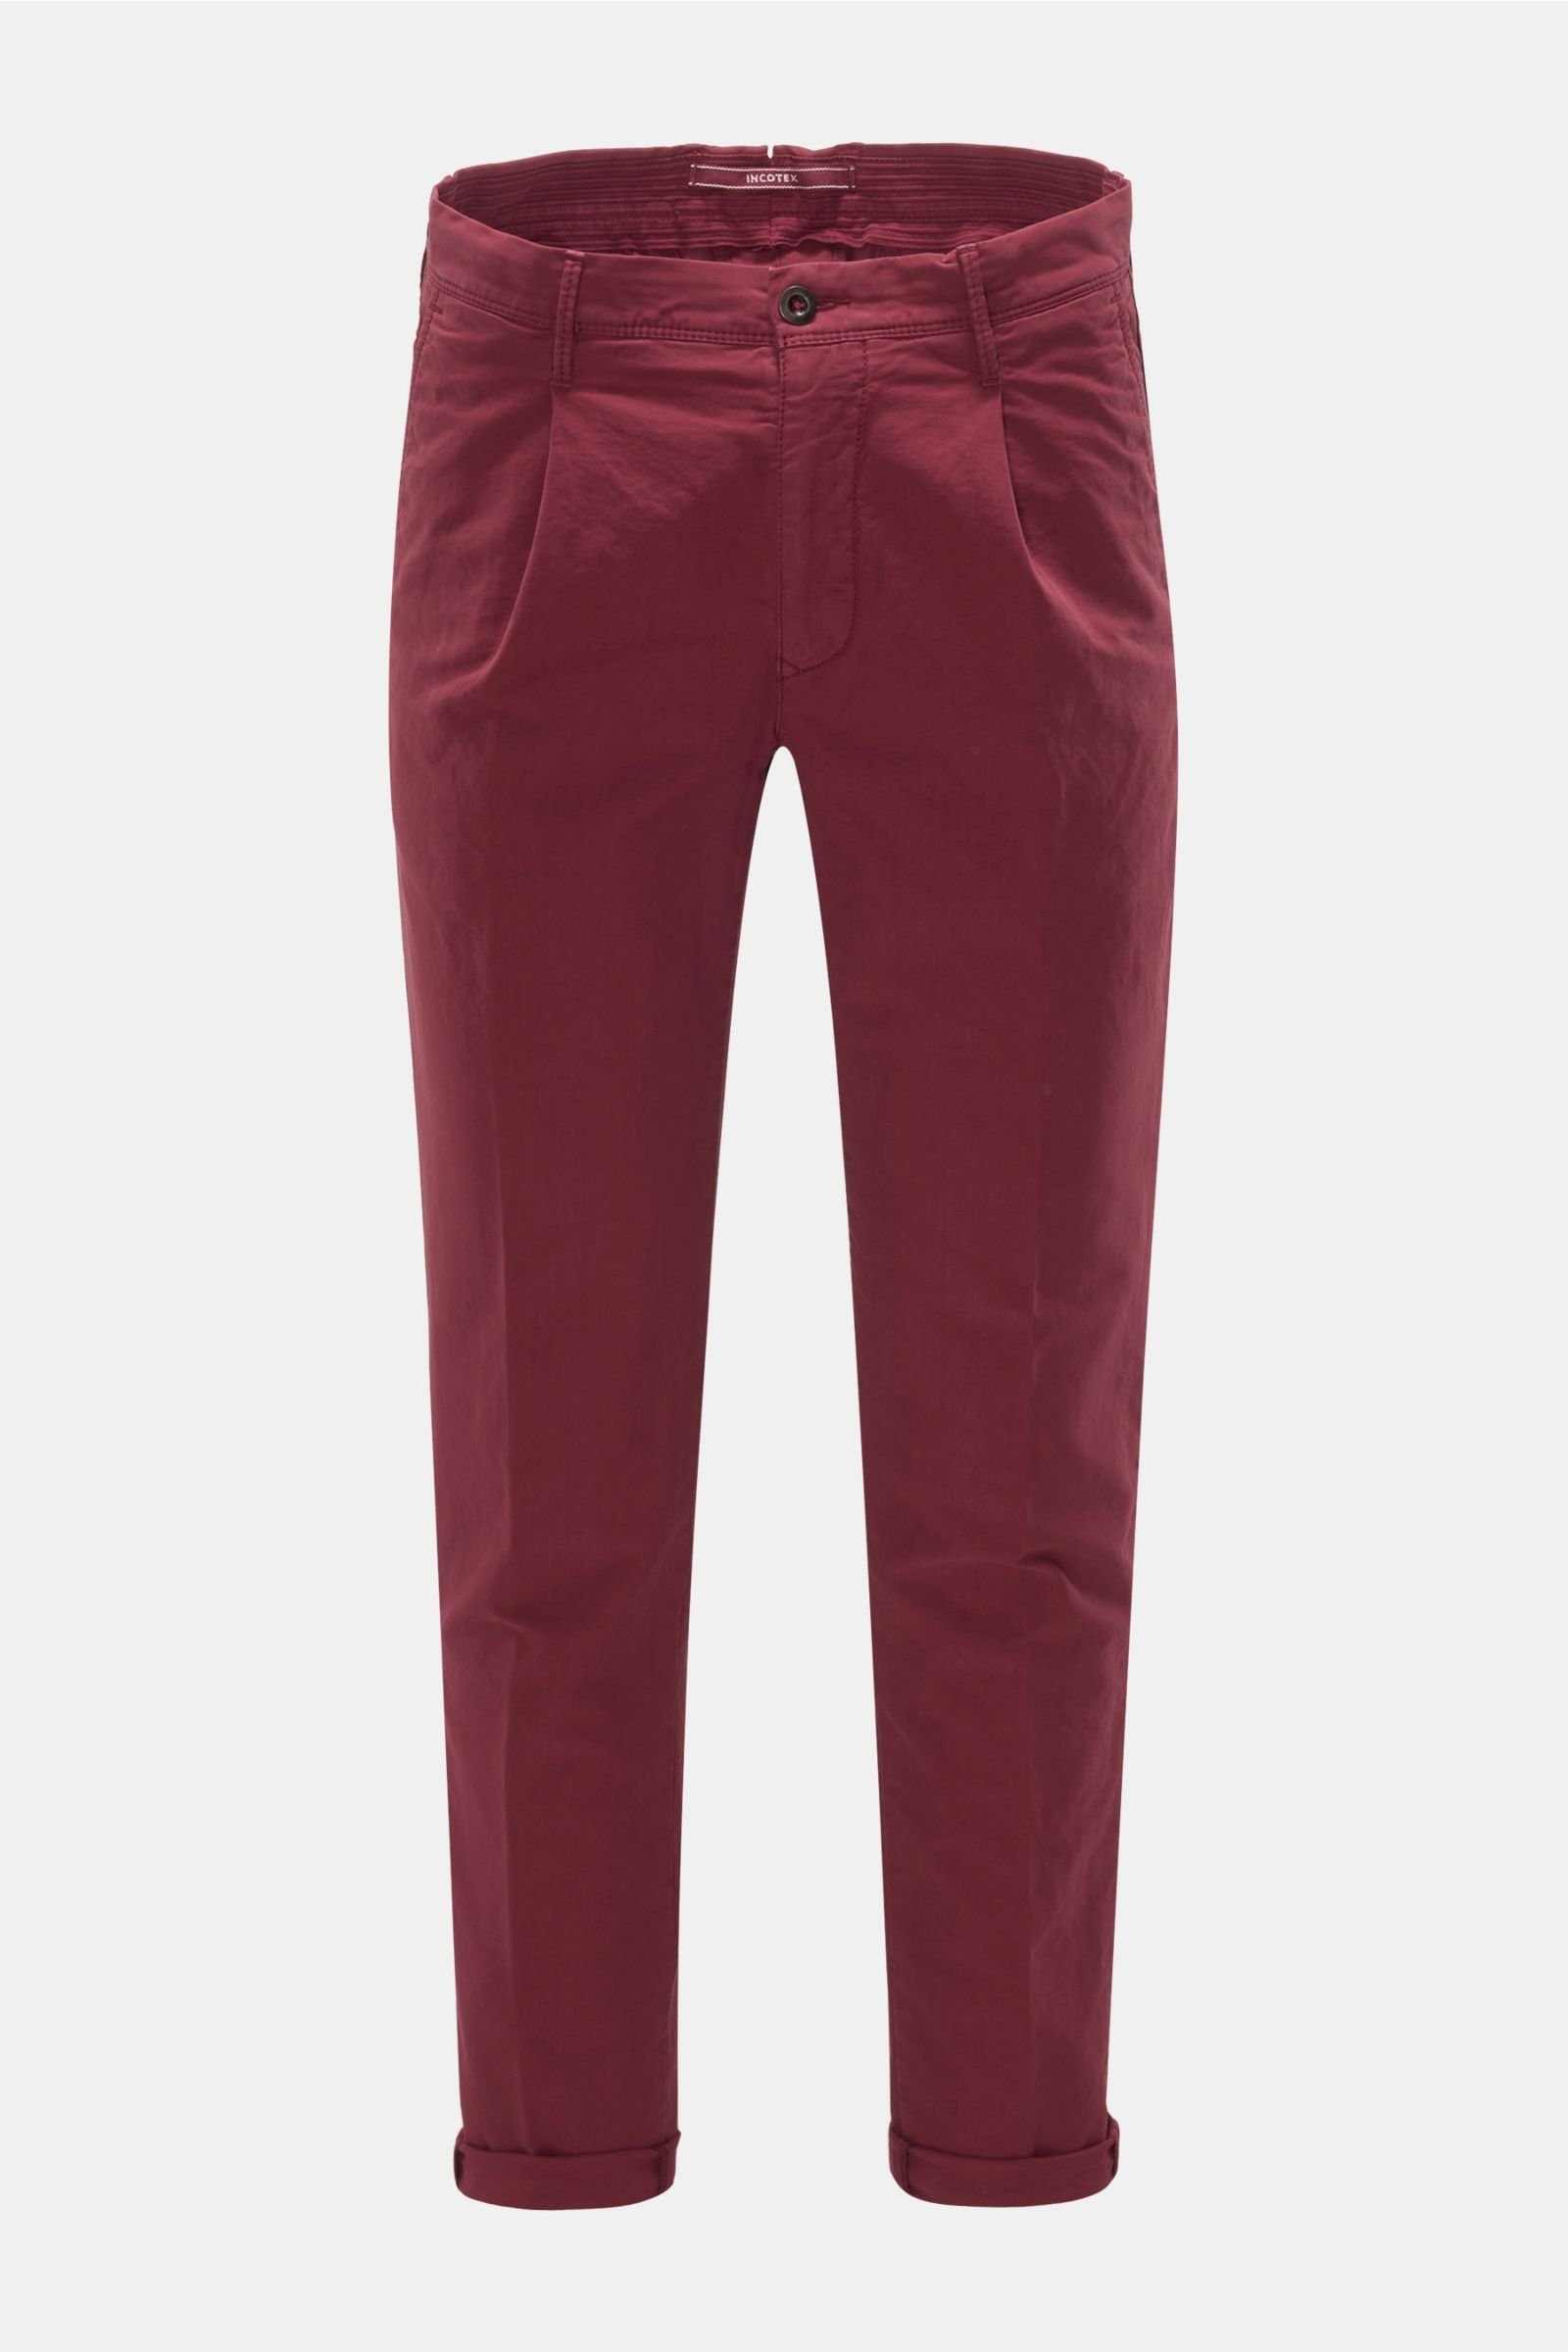 cotton trousers 'Slacks' dark red | Hamburg